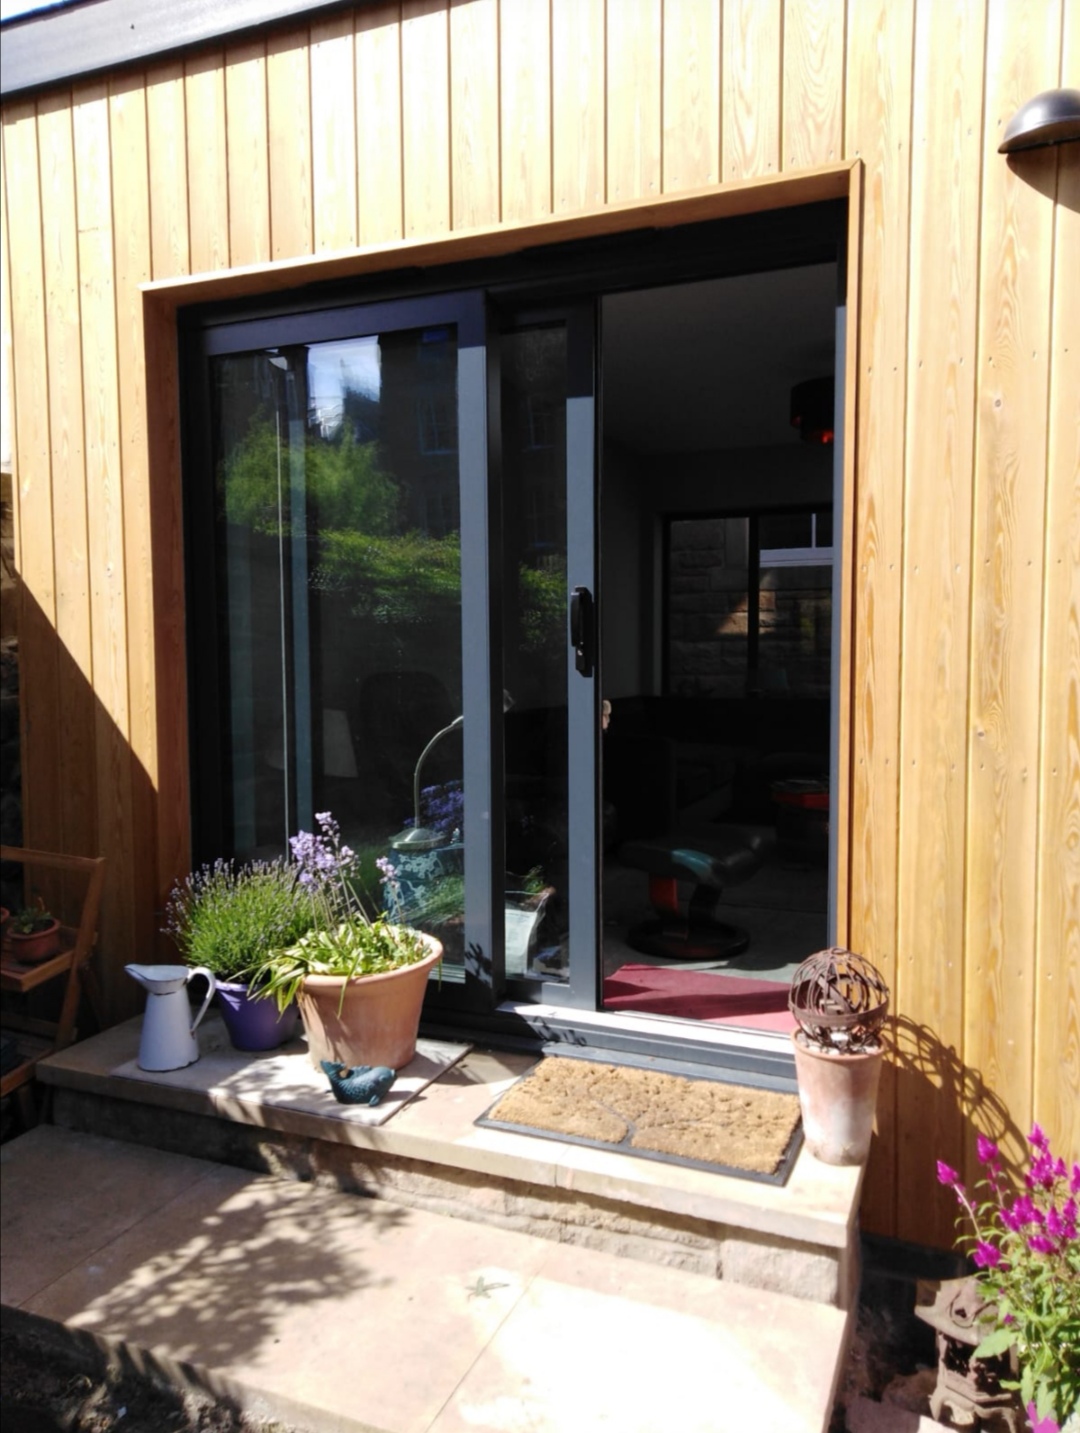 Sun room extension to period property, Cedar cladding